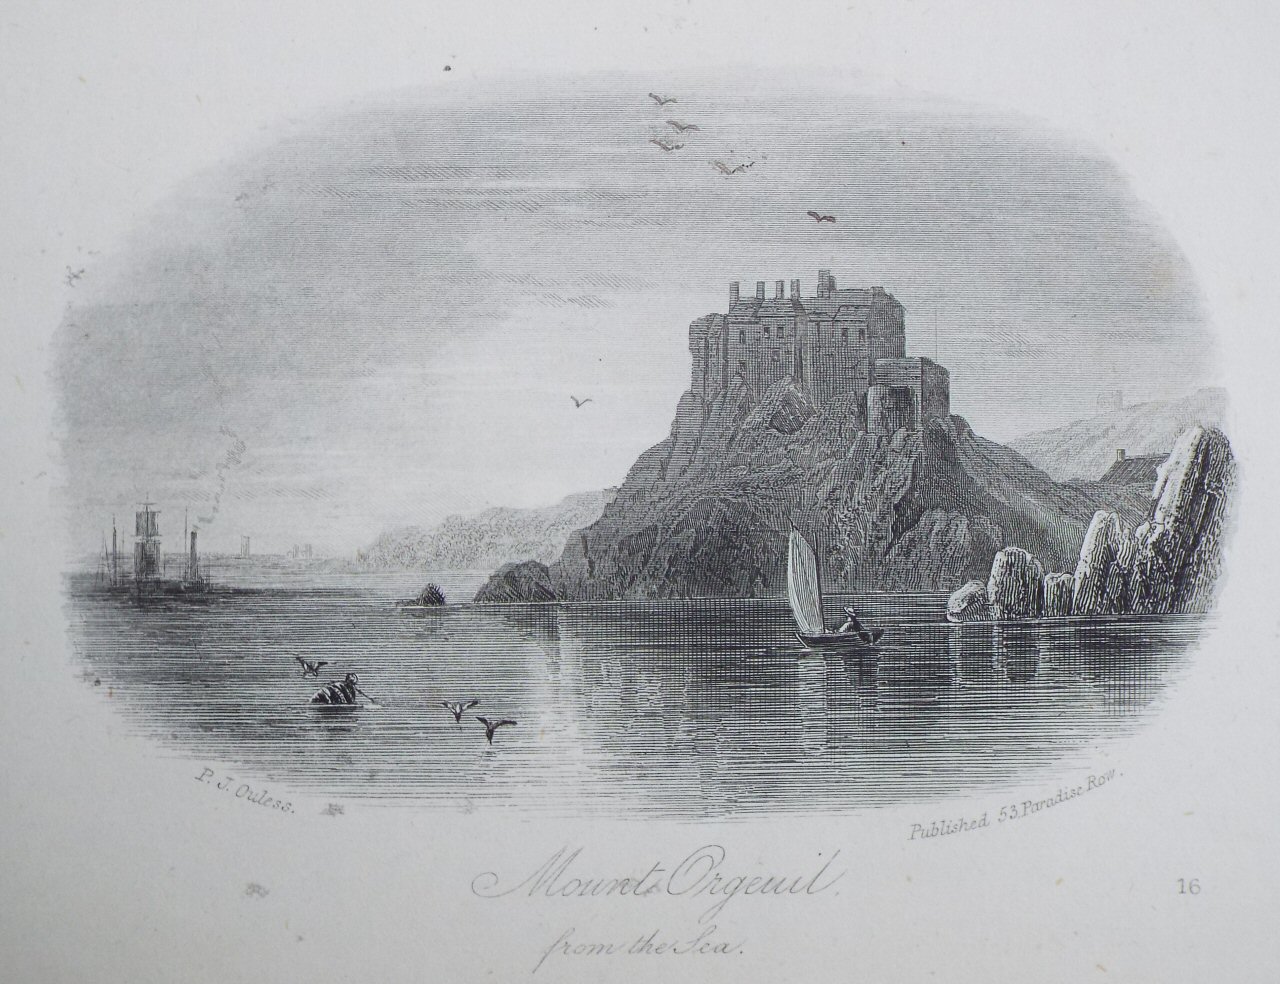 Steel Vignette - Mount Orgueil Castle from the Sea.